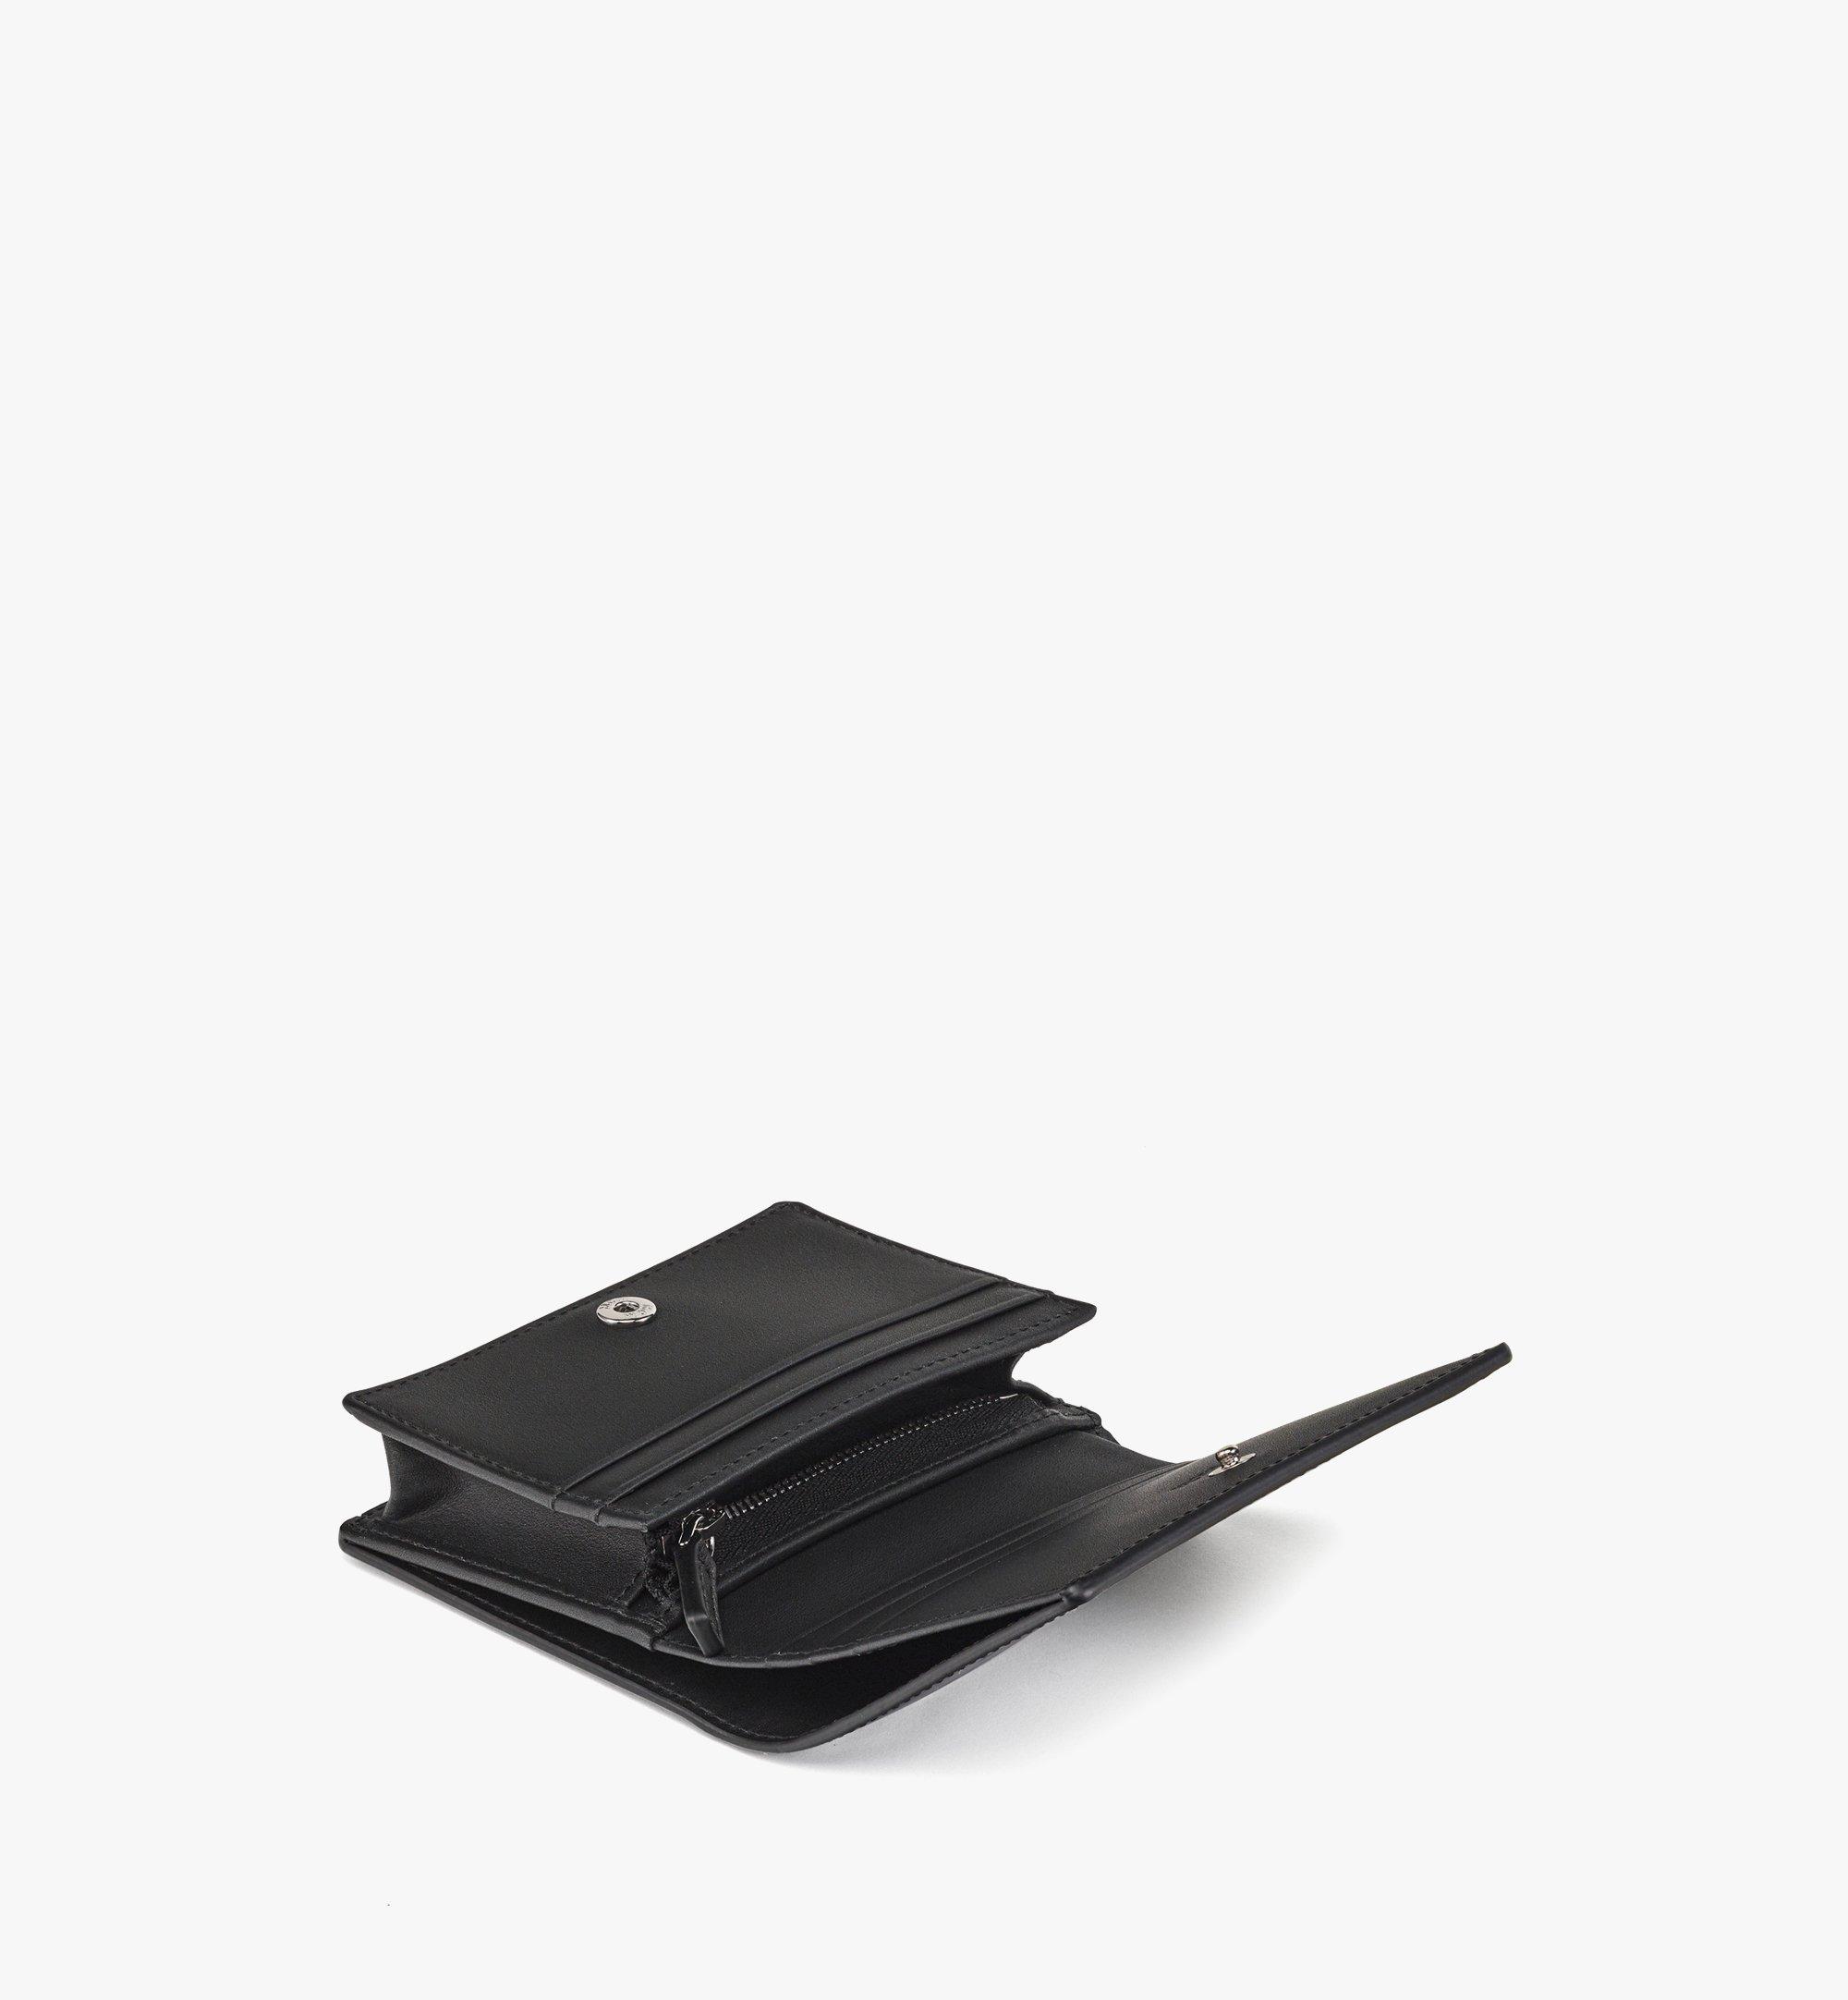 MCM Aren Bifold Snap Wallet in Maxi Patent Leather Black MYSDATA02BK001 Alternate View 1